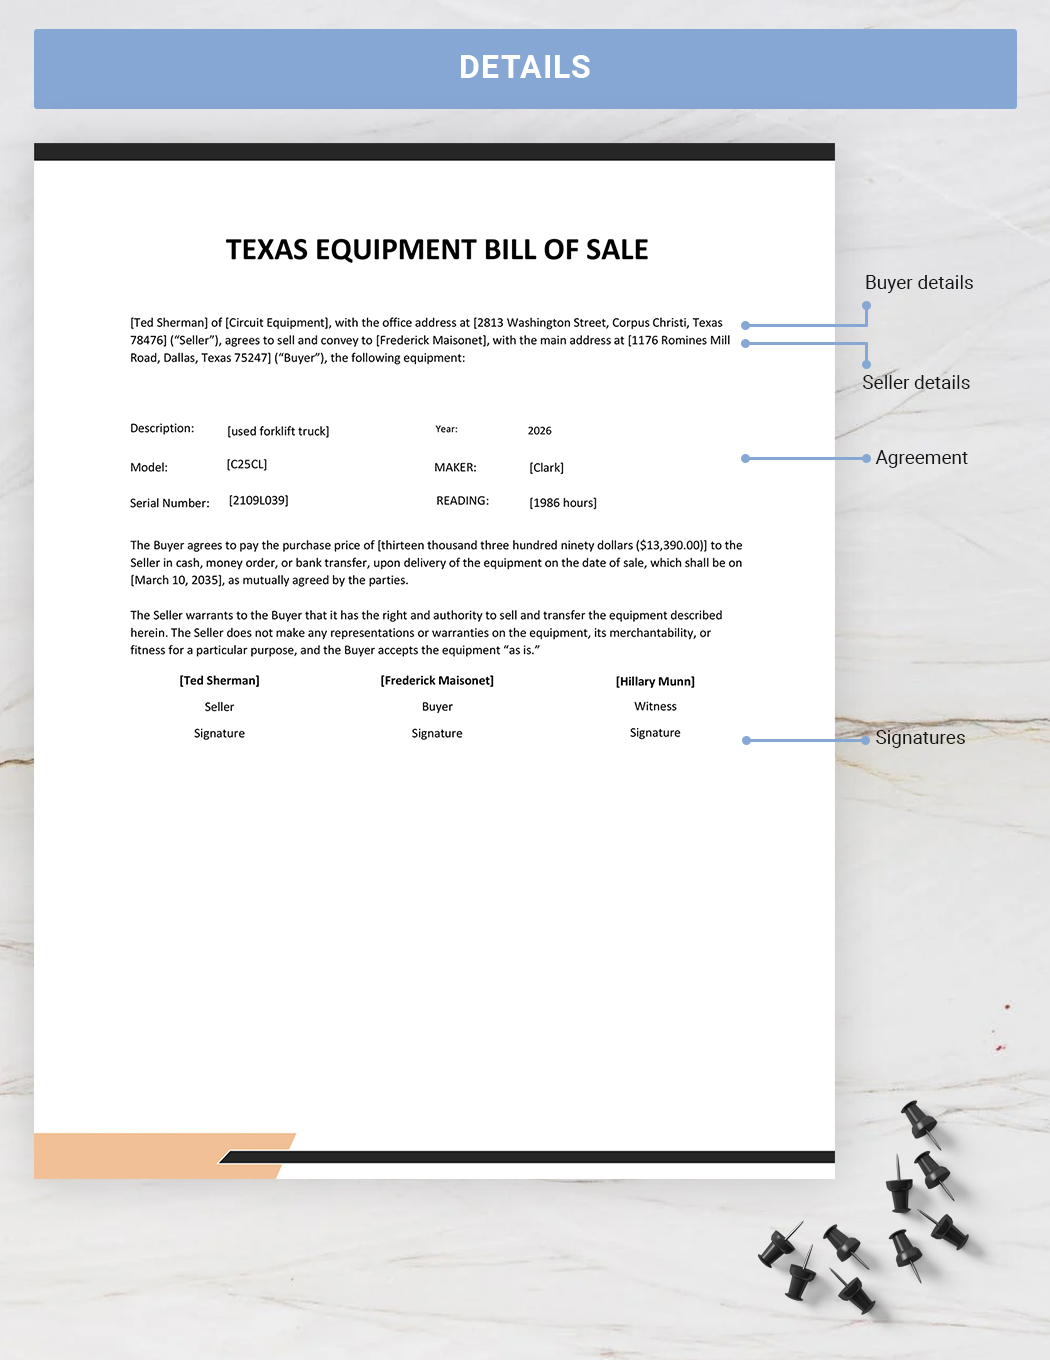 Texas Equipment Bill of Sale Form Template